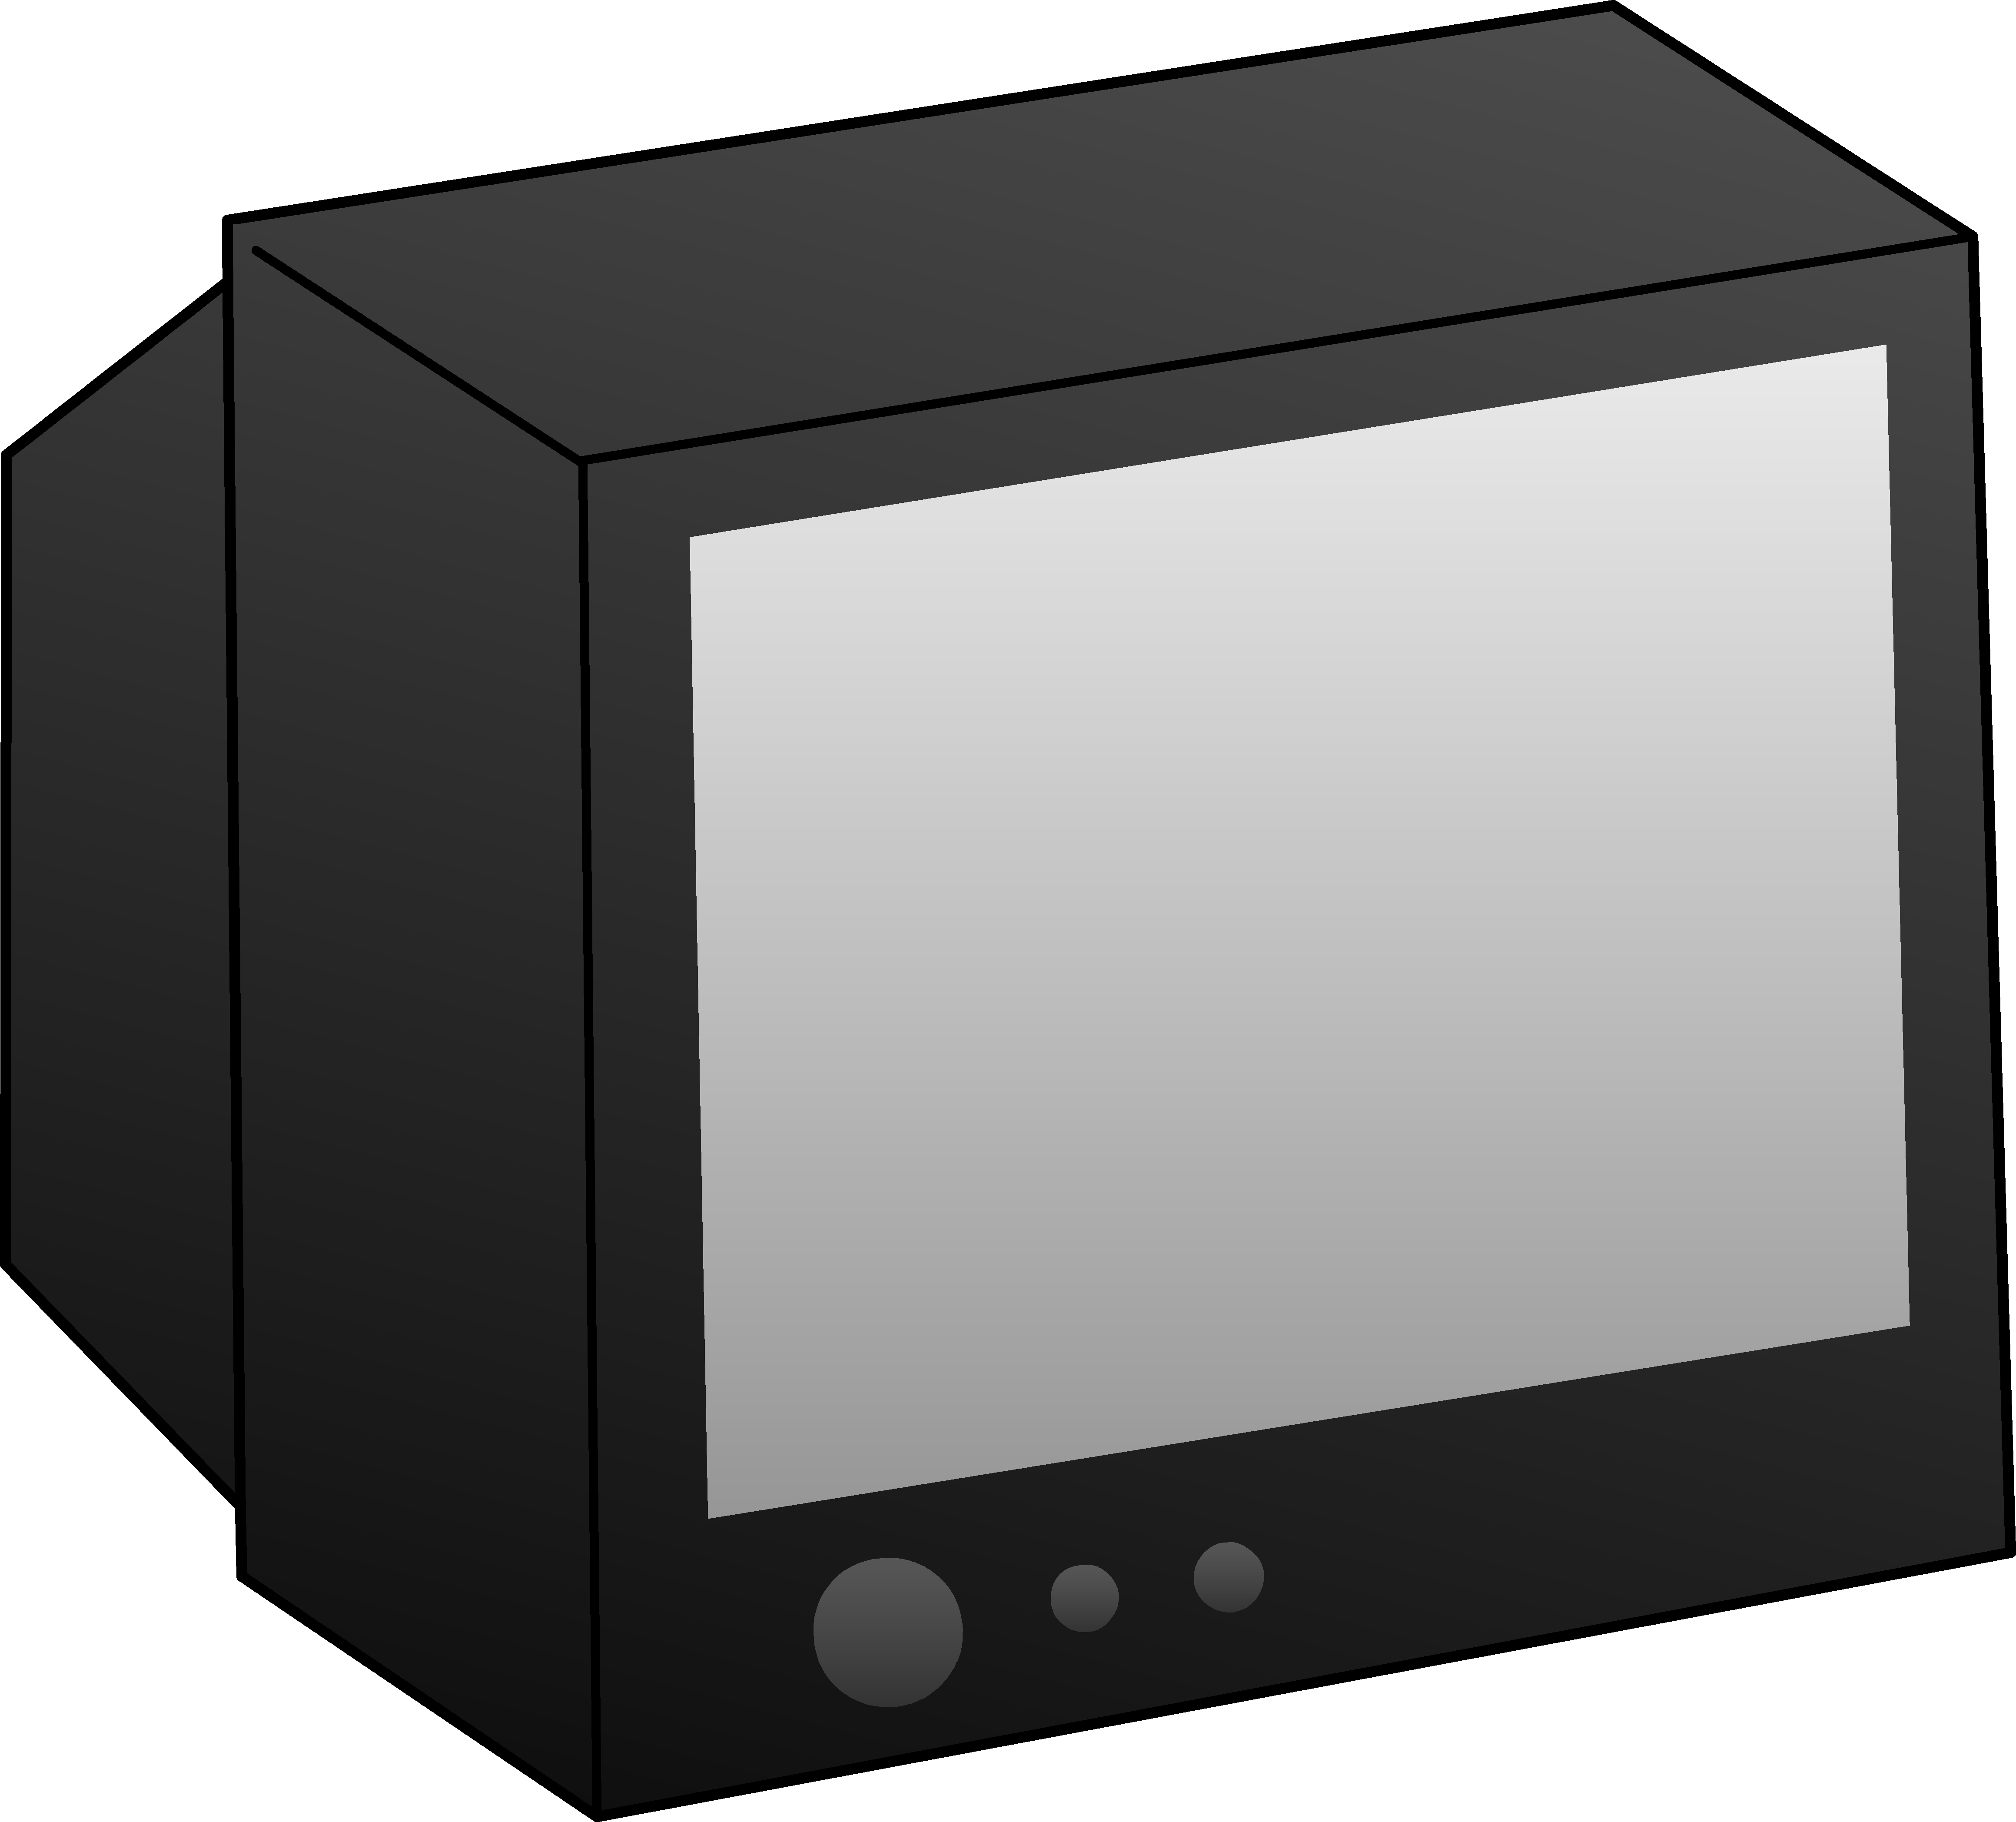 Dl tv. Квадратный телевизор. Старый квадратный телевизор. Телевизор на белом фоне. Квадратный телевизор на белом фоне.